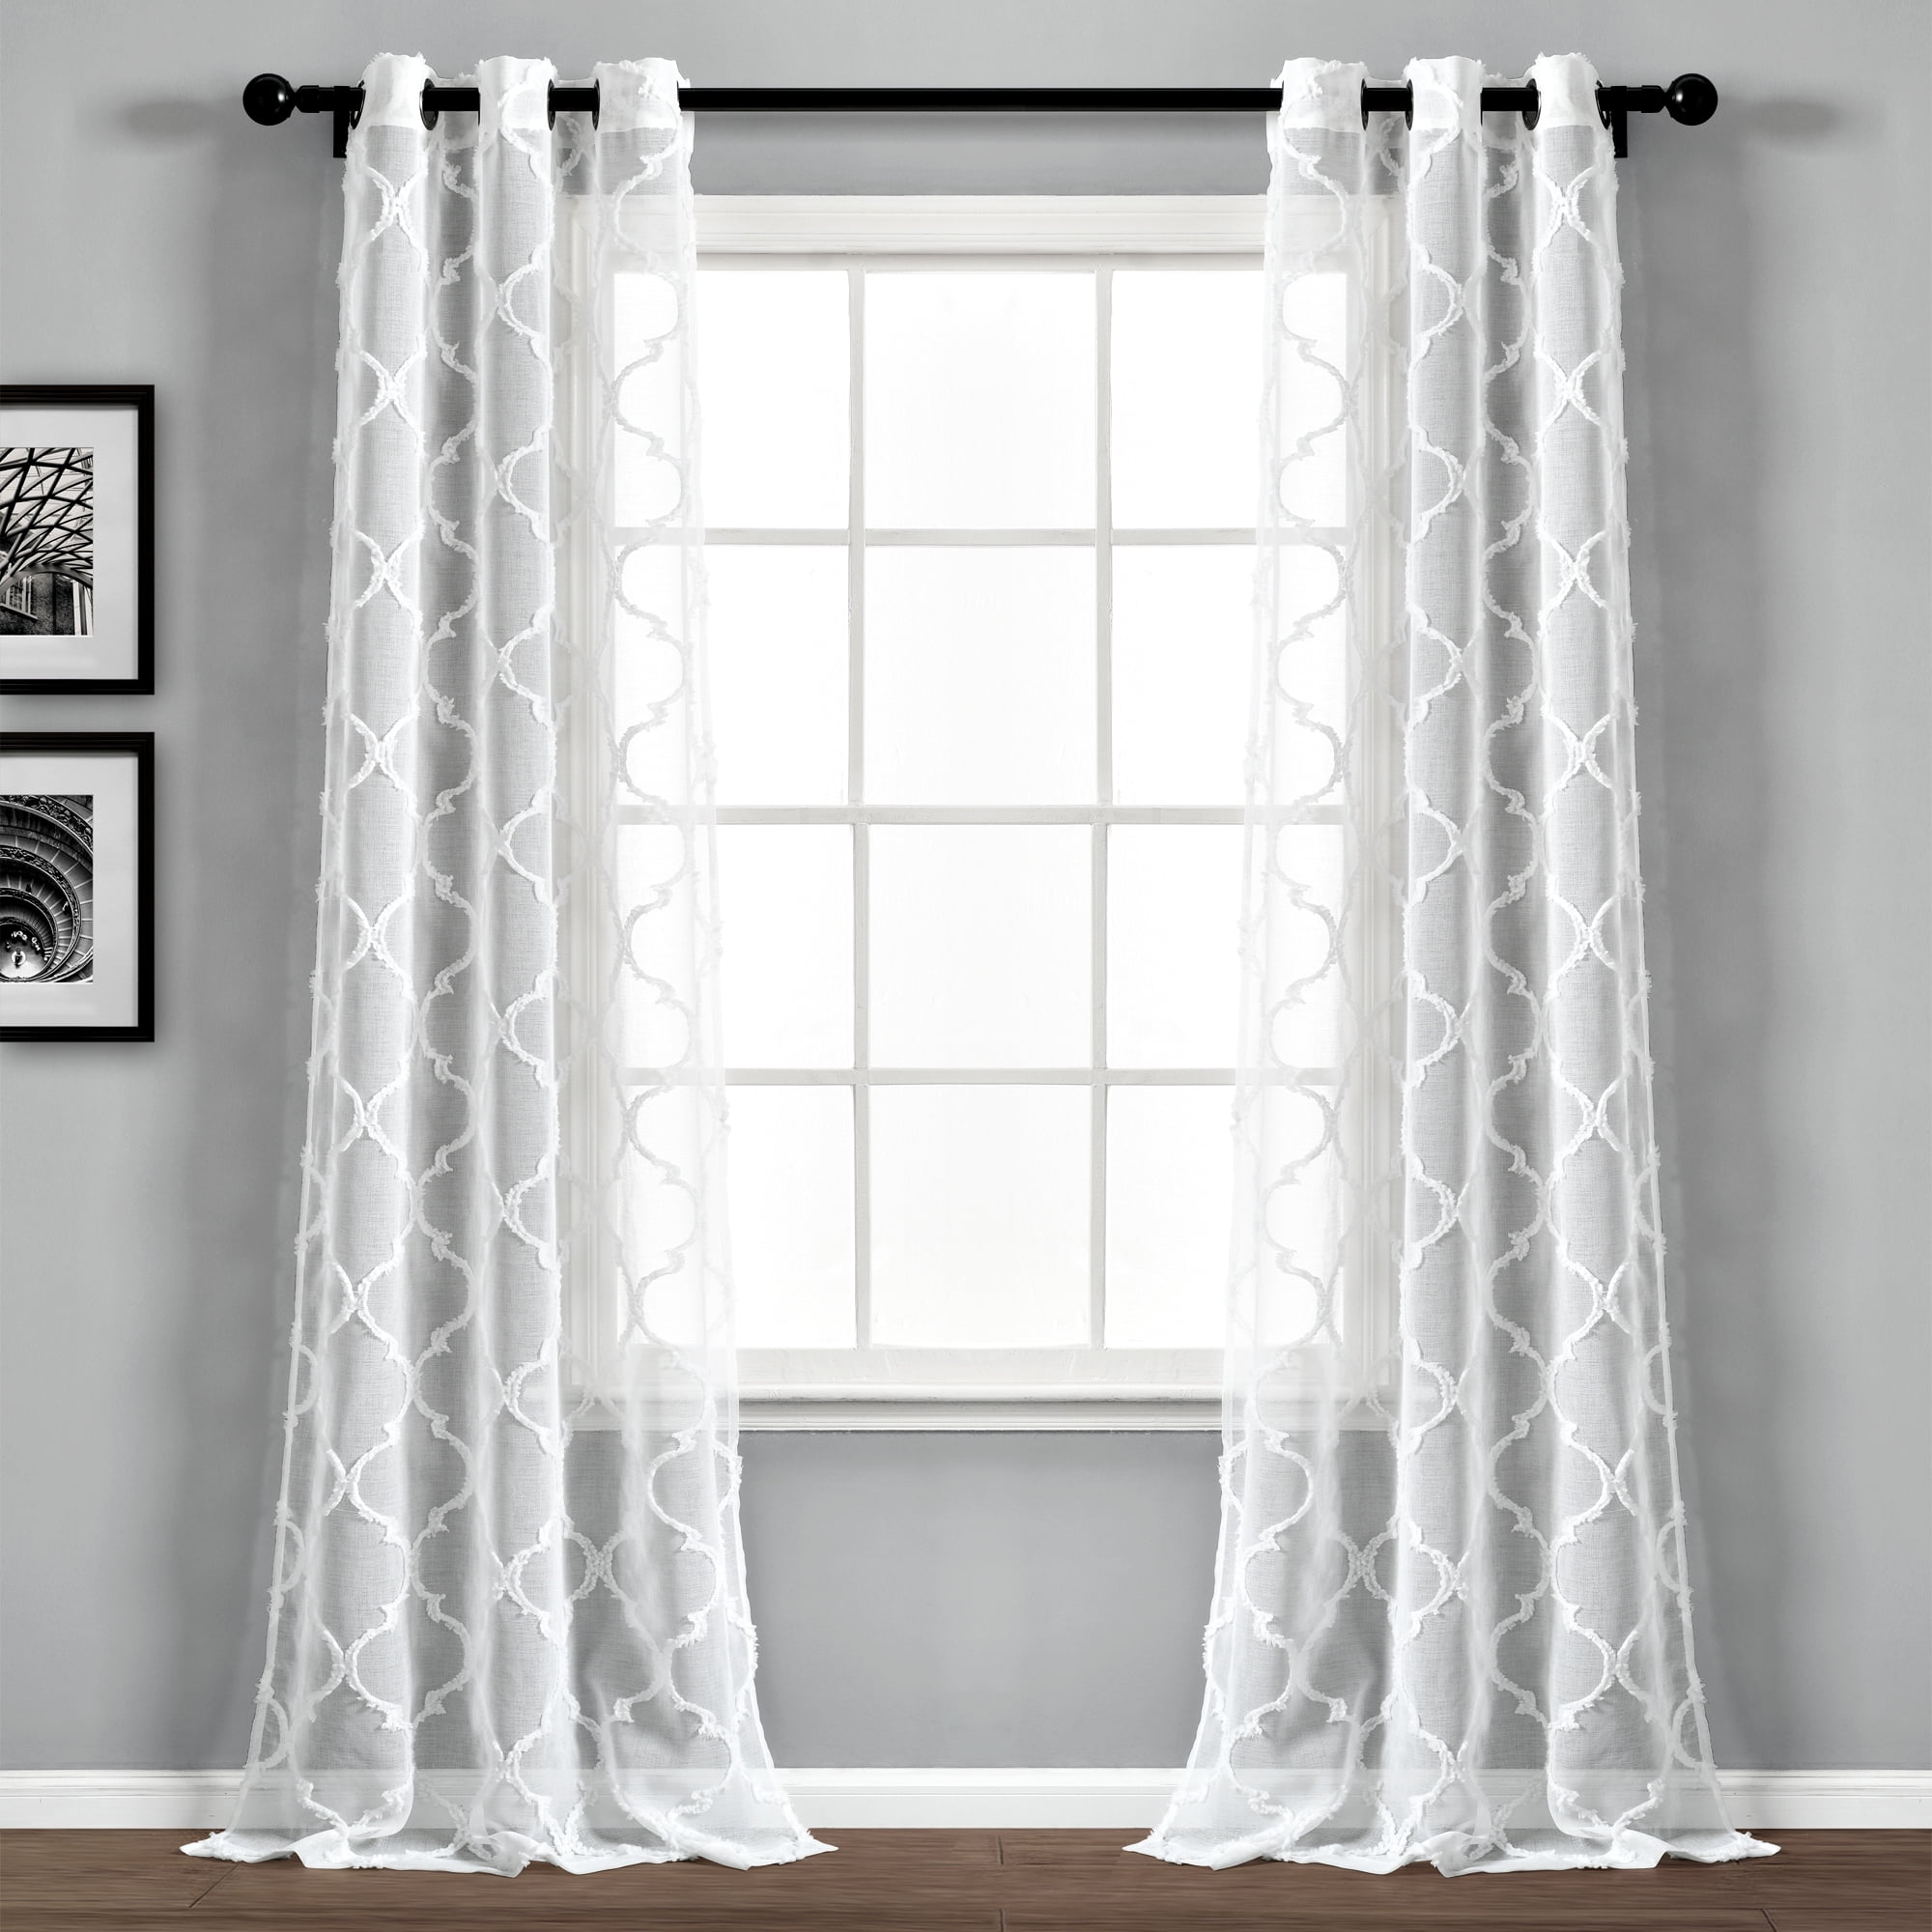 Grommets Single Rust Window Curtain Panel: White Trellis Design 54x84 1 